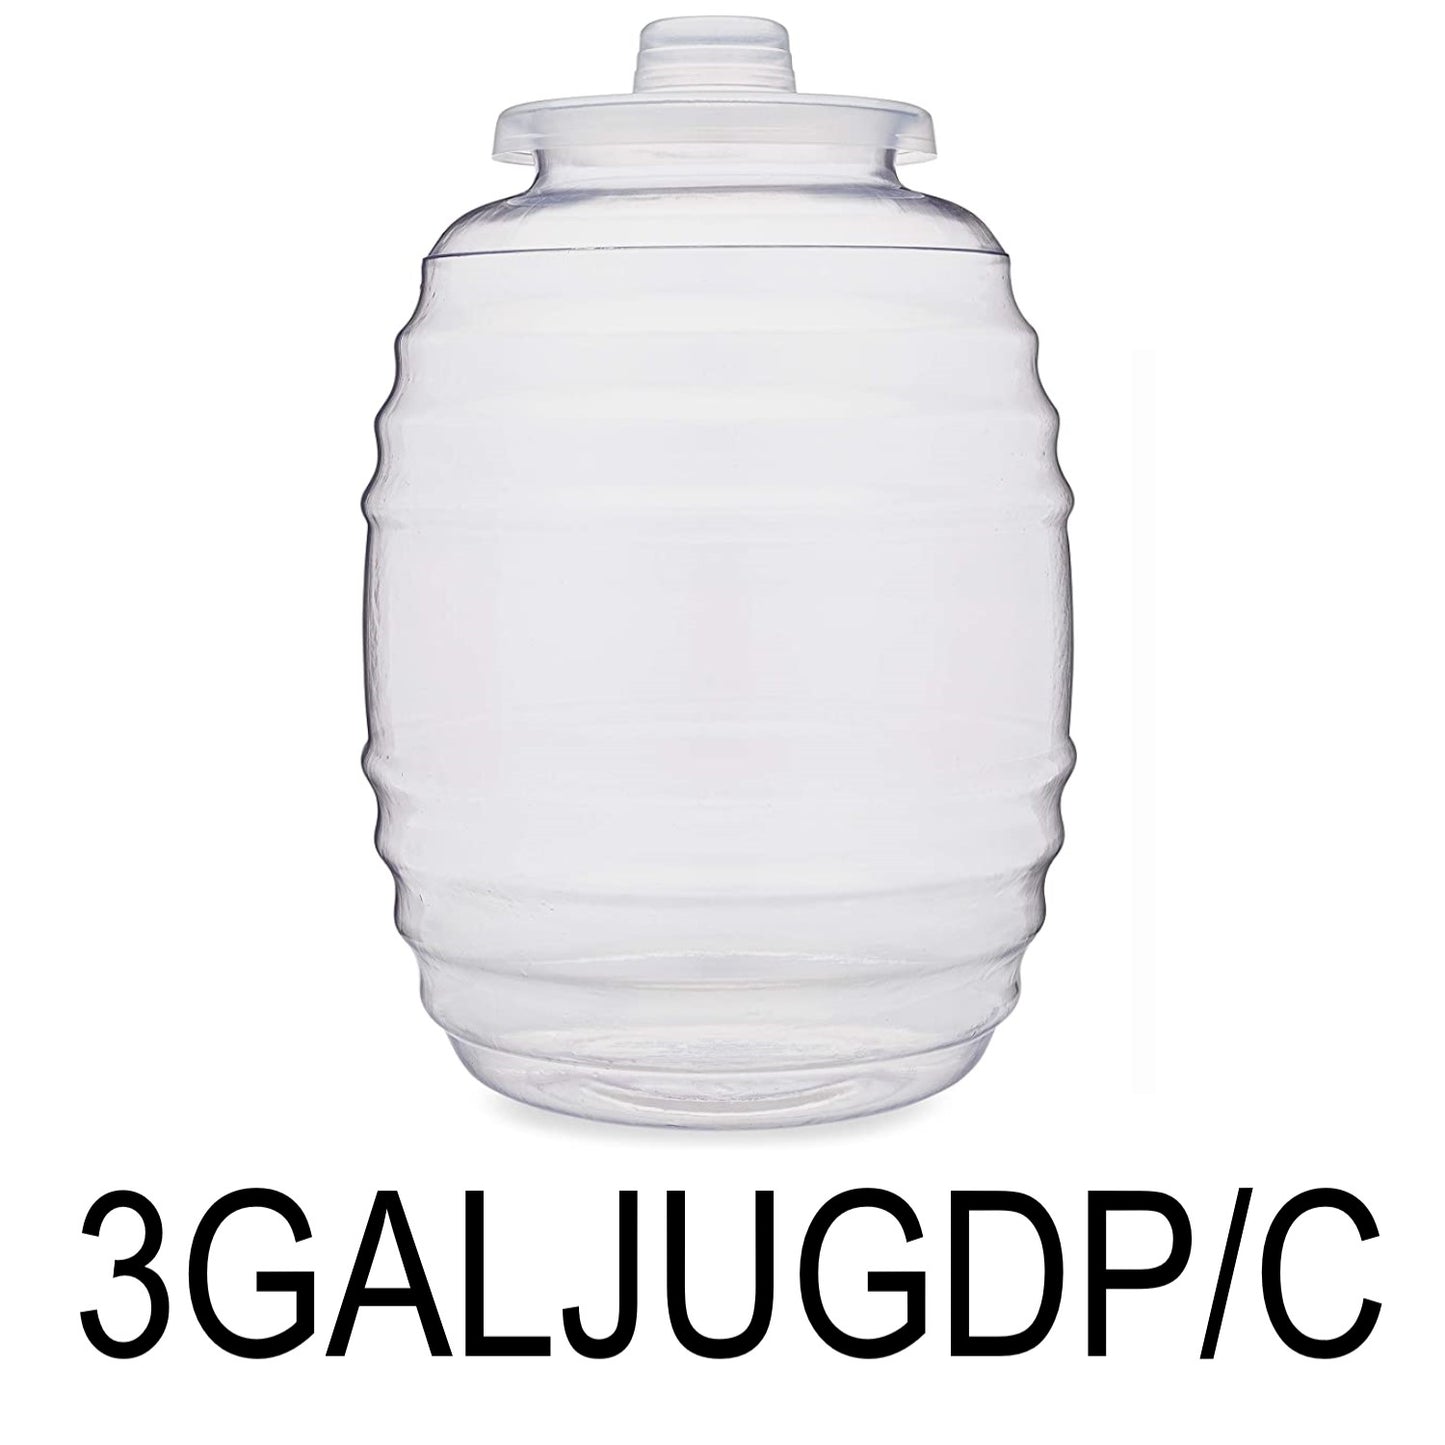  CHAMPS 5 Gallon Jug - Aguas Frescas Vitrolero Plastic